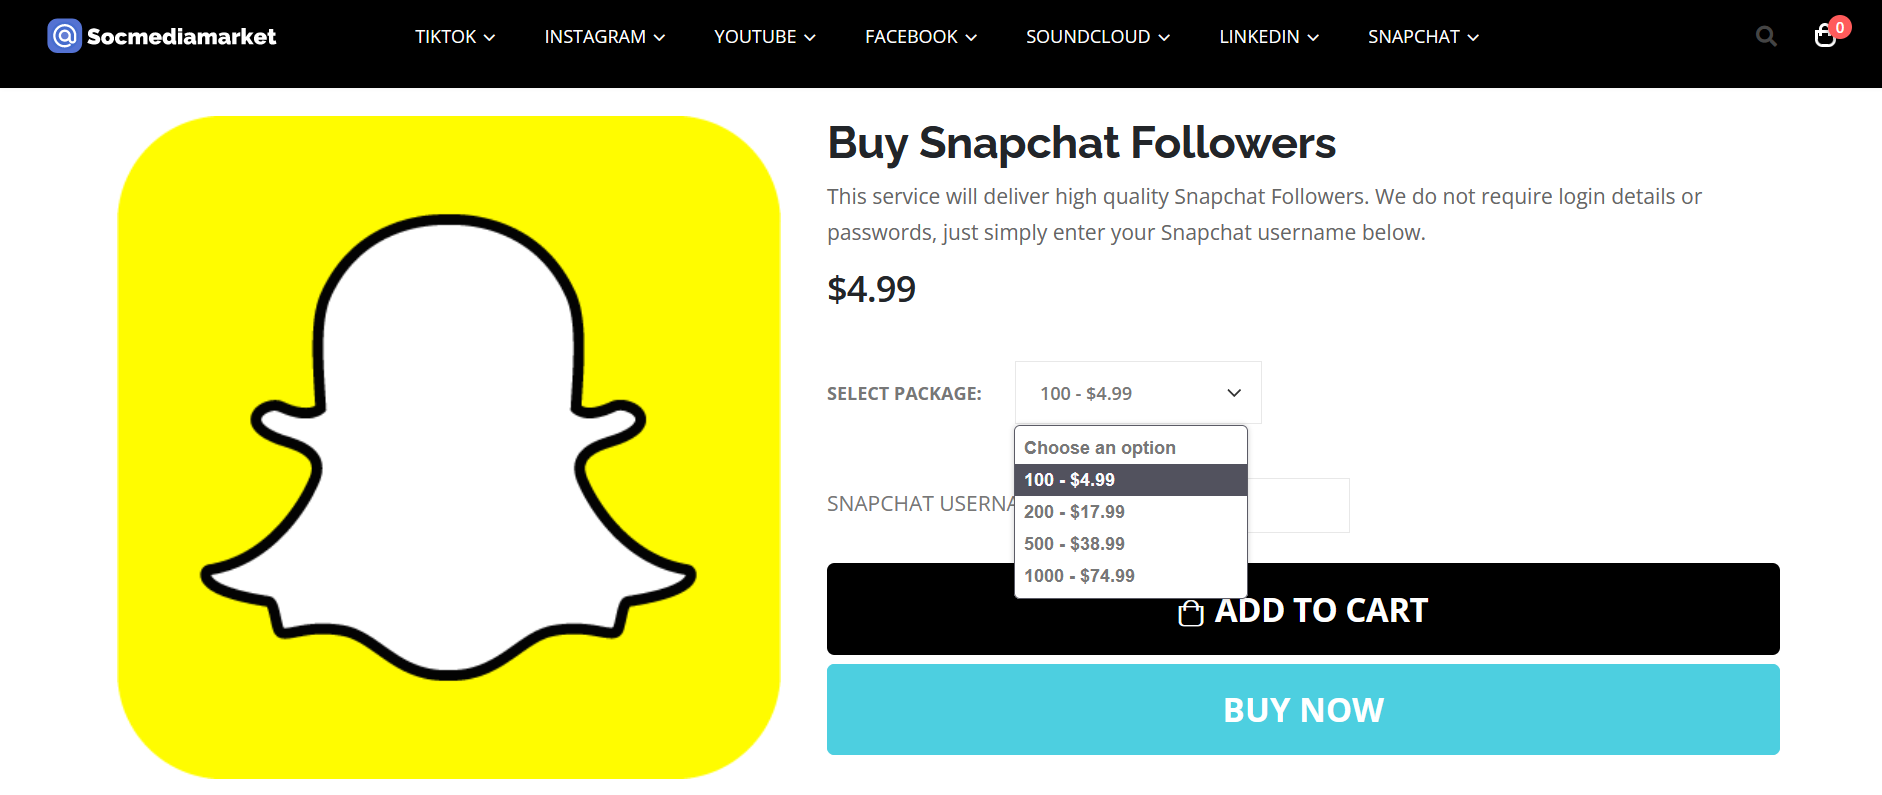 Buy Snapchat followers on Socmediamarket website